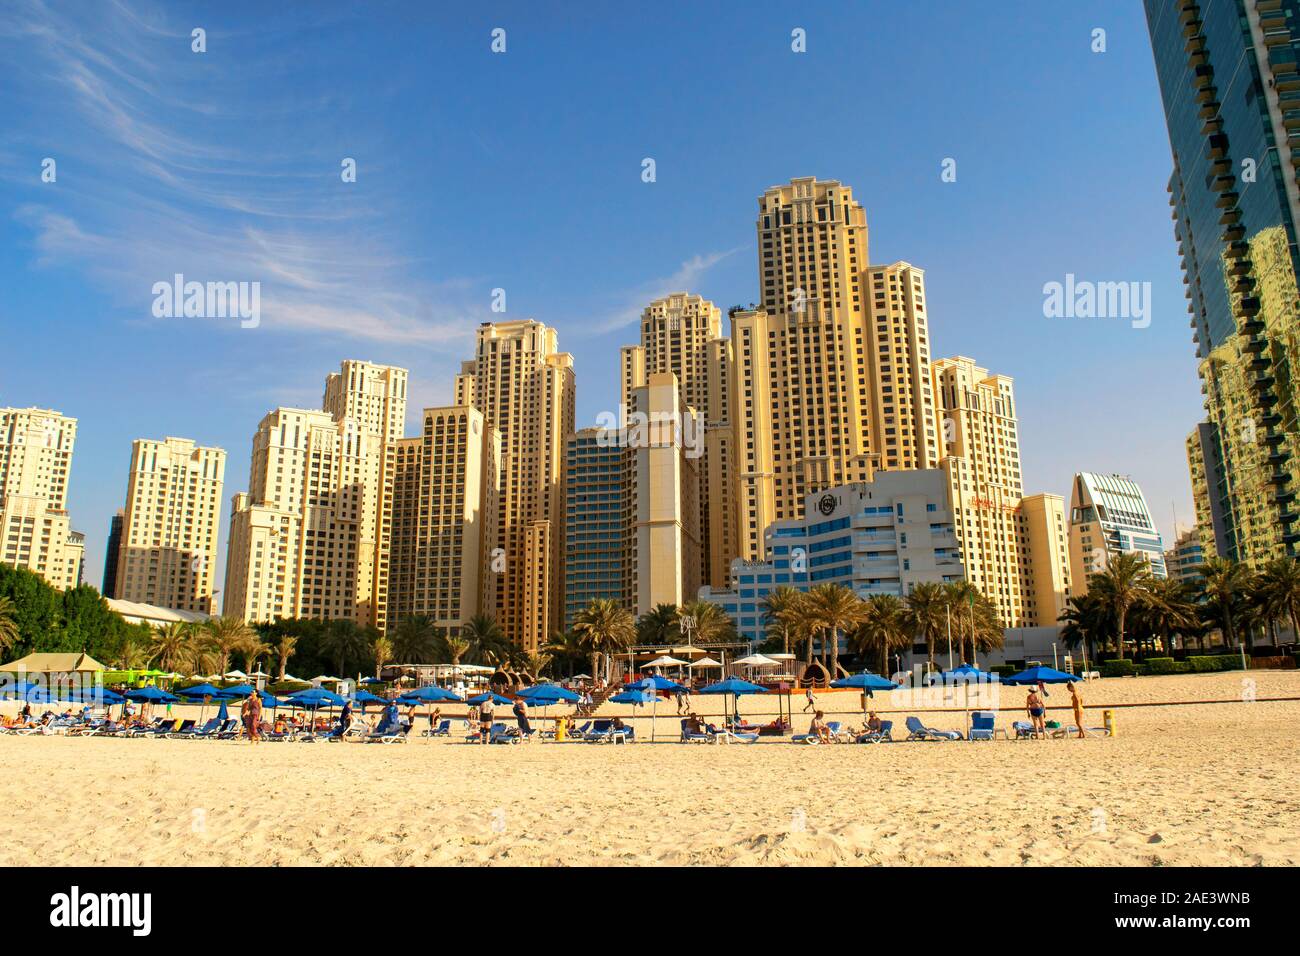 Dubai / UAE - November 7, 2019: JBR. Beautiful view of Jumeirah Beach Residence skyscrapers. Urban beach in Middle East. Stock Photo